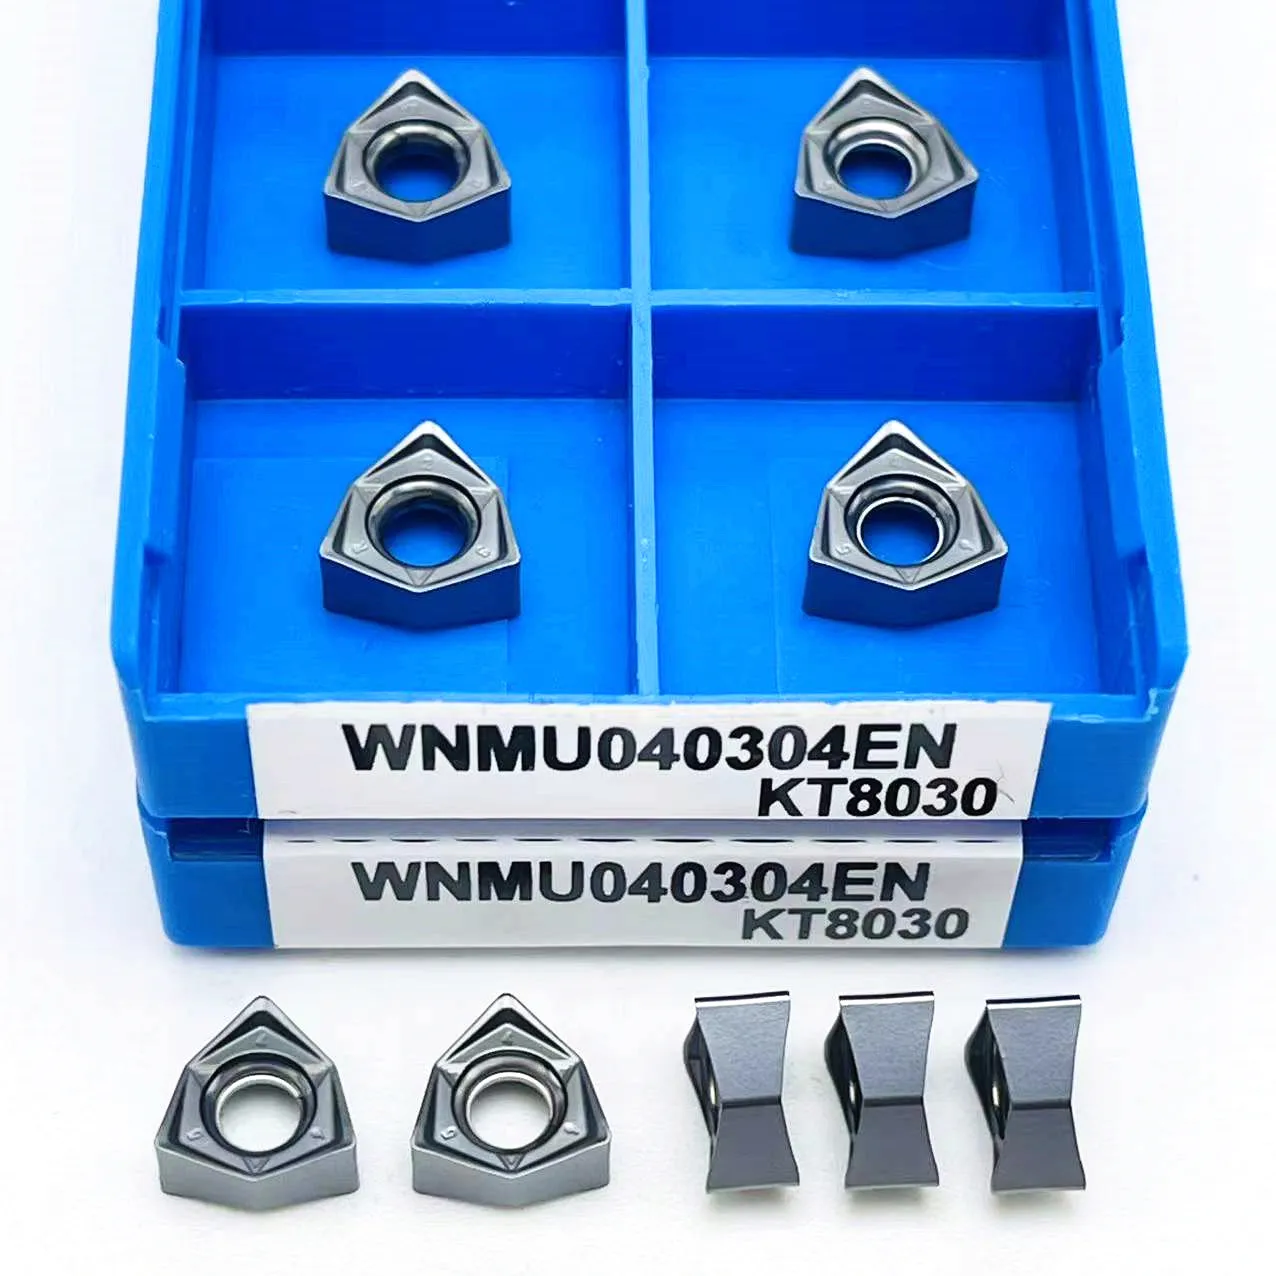 WNMU040304 WNMU040308 fast feed double-sided hexagonal WNMU 040304 milling inser - £223.57 GBP